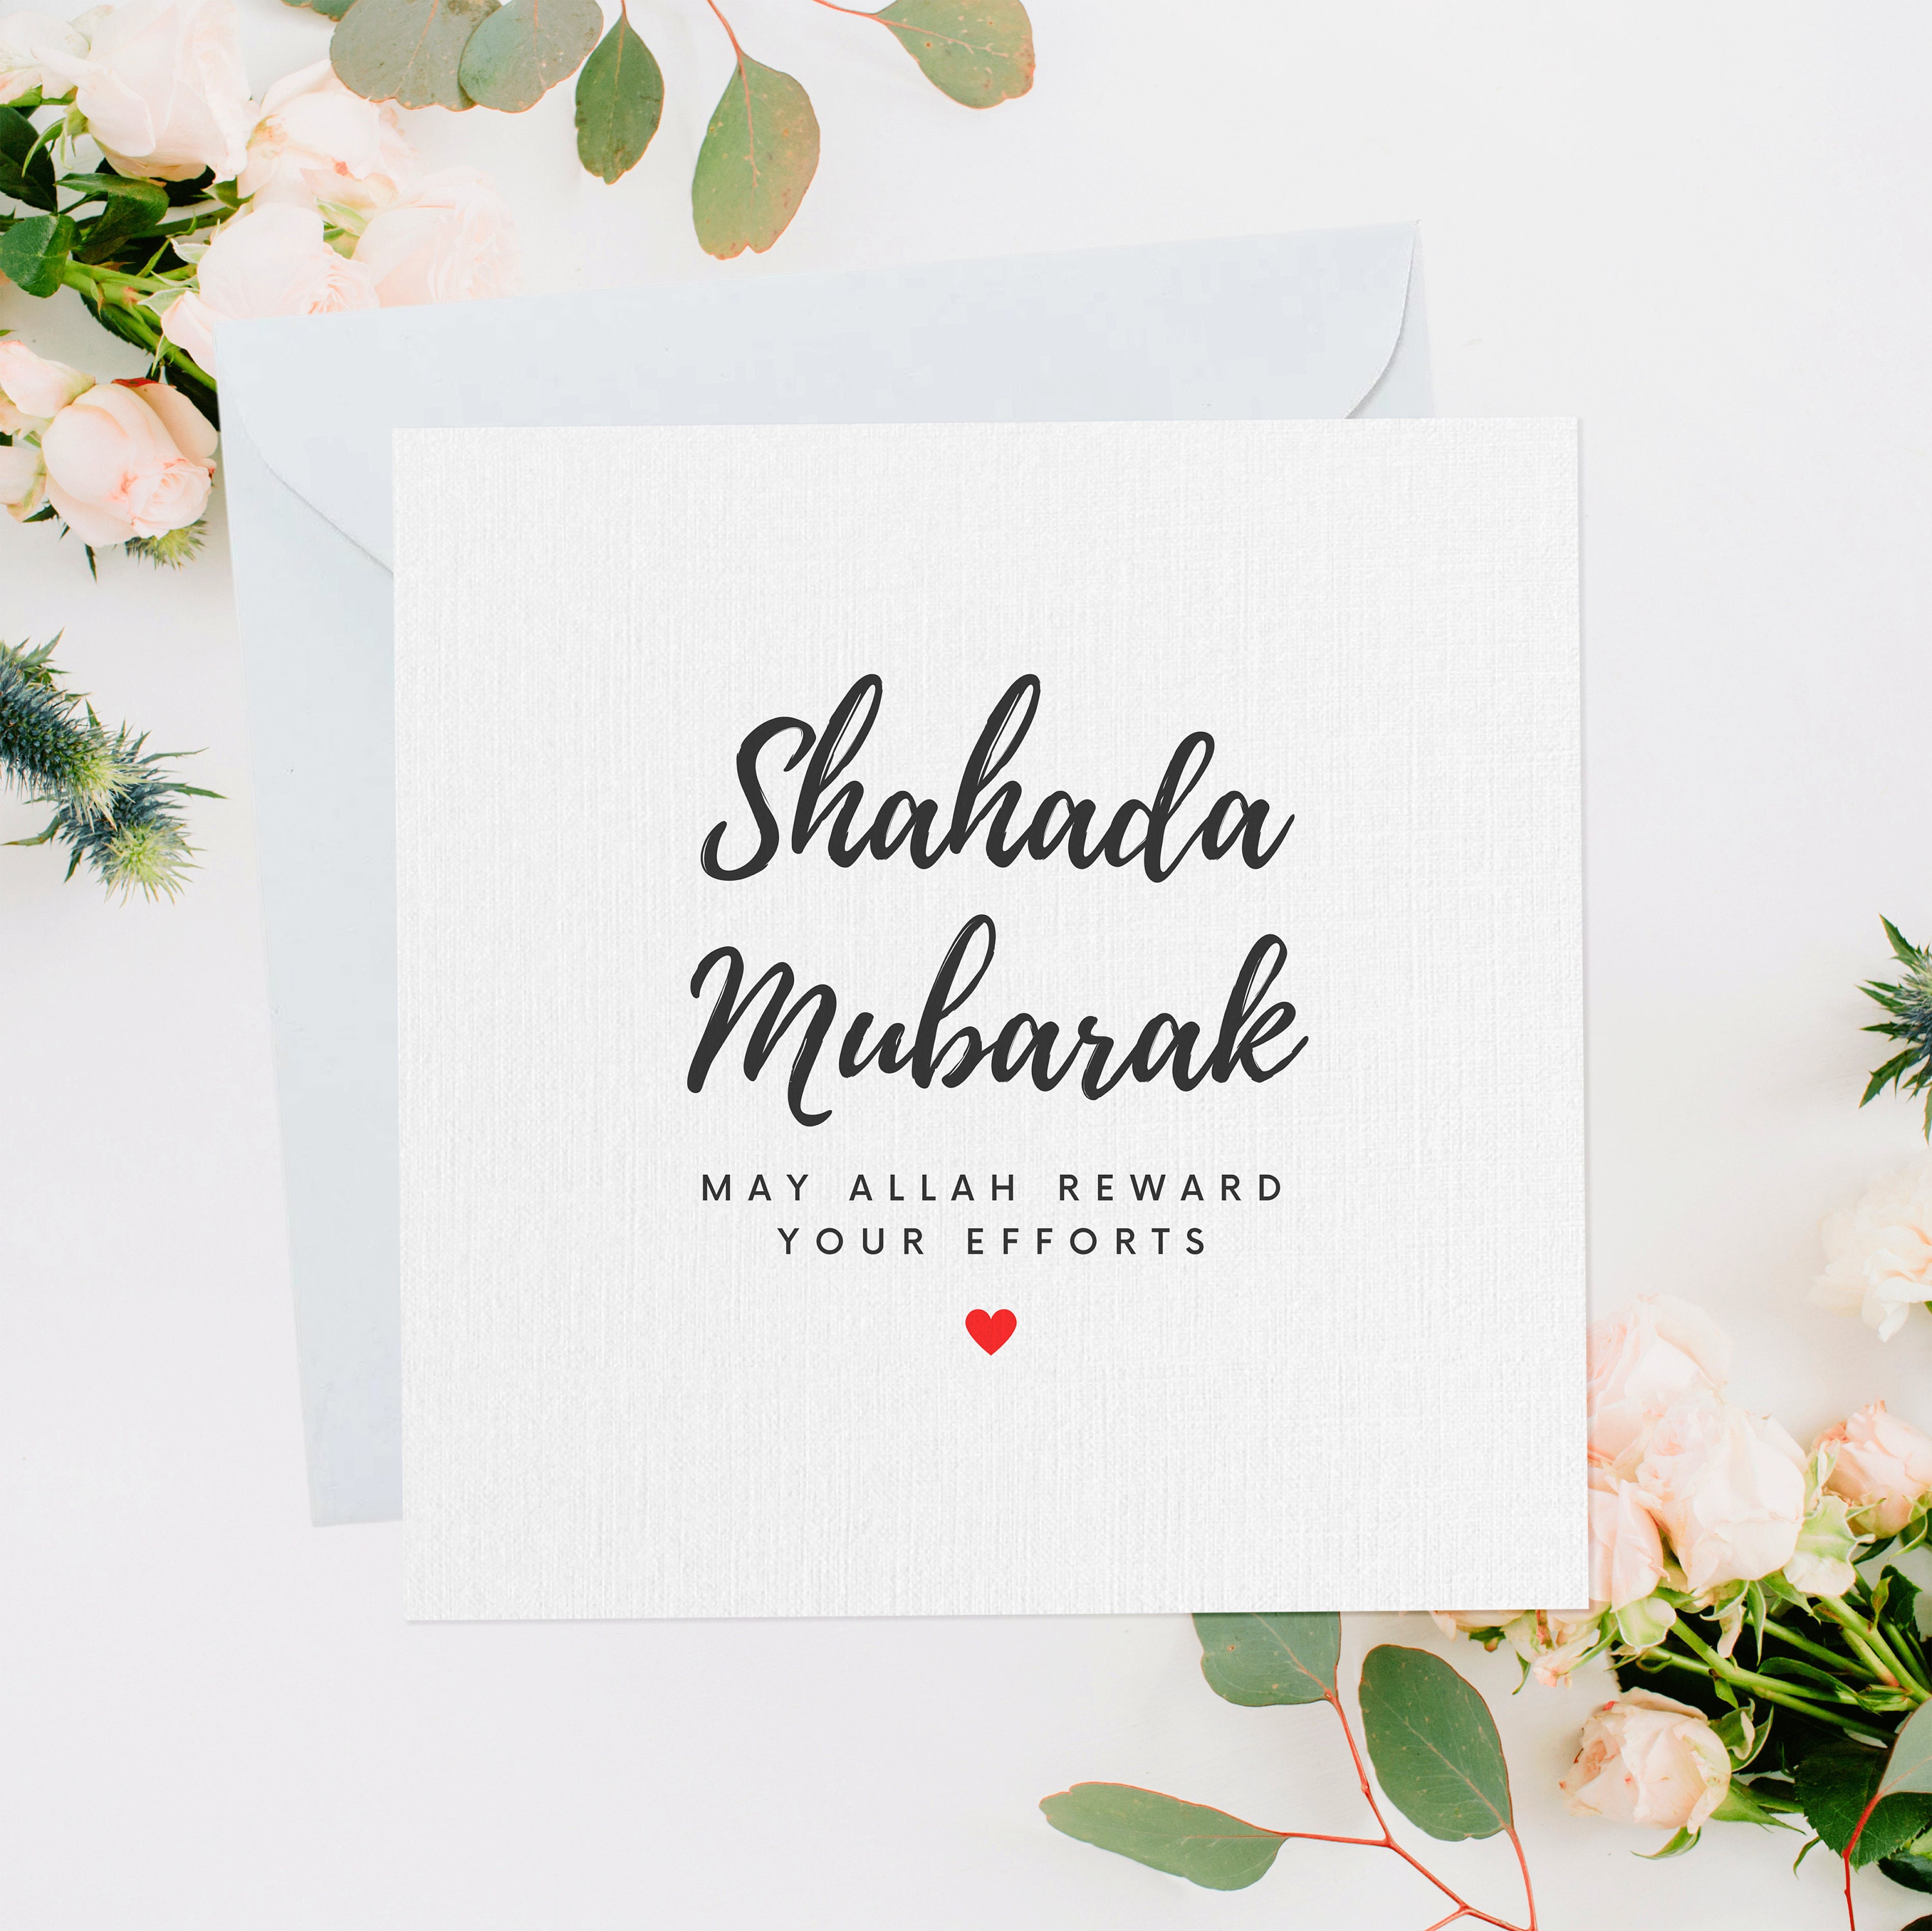 Shahada Stars Coran Mobile – Petite Muslima